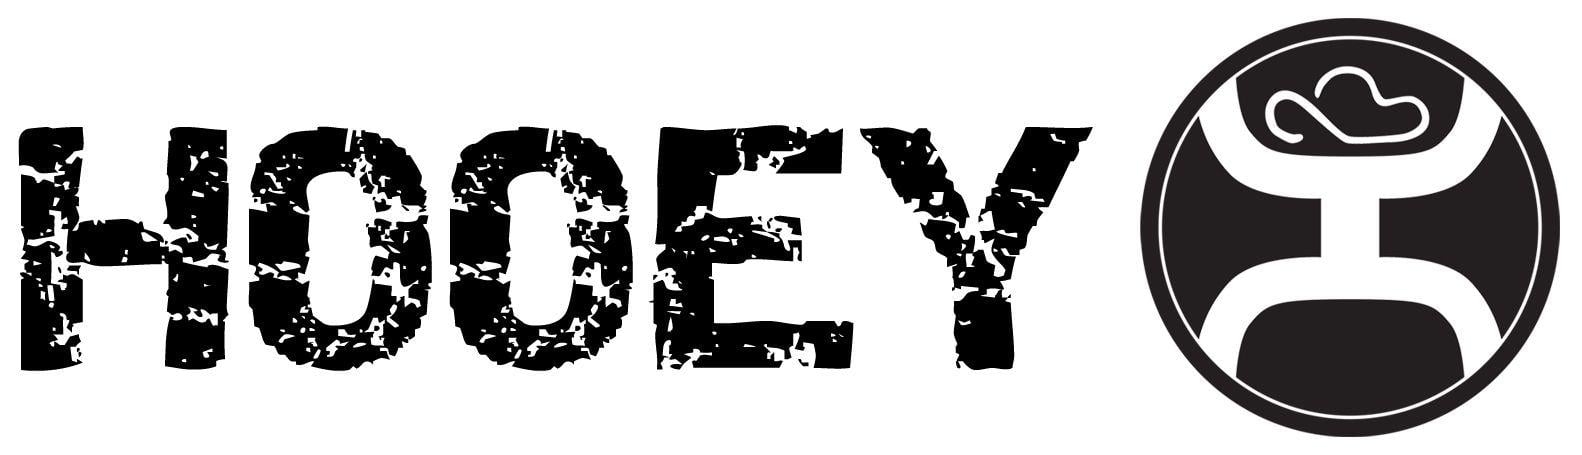 Getyourhooey Logo - Get Your Hooey Logo Related Keywords & Suggestions - Get Your Hooey ...